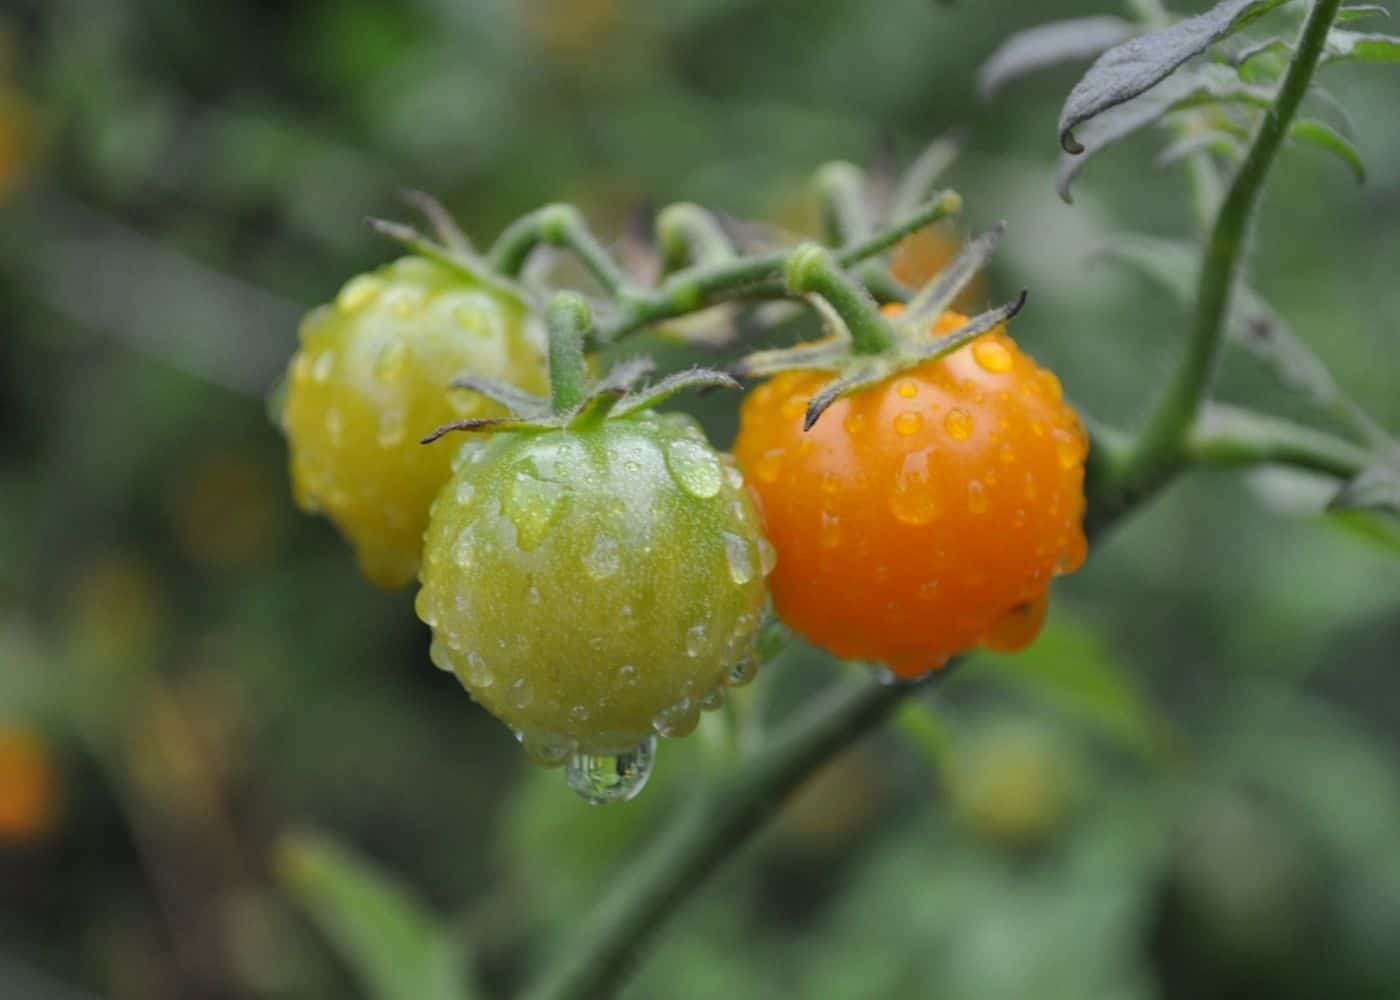 Sun sugar tomatoes on the vine after rain